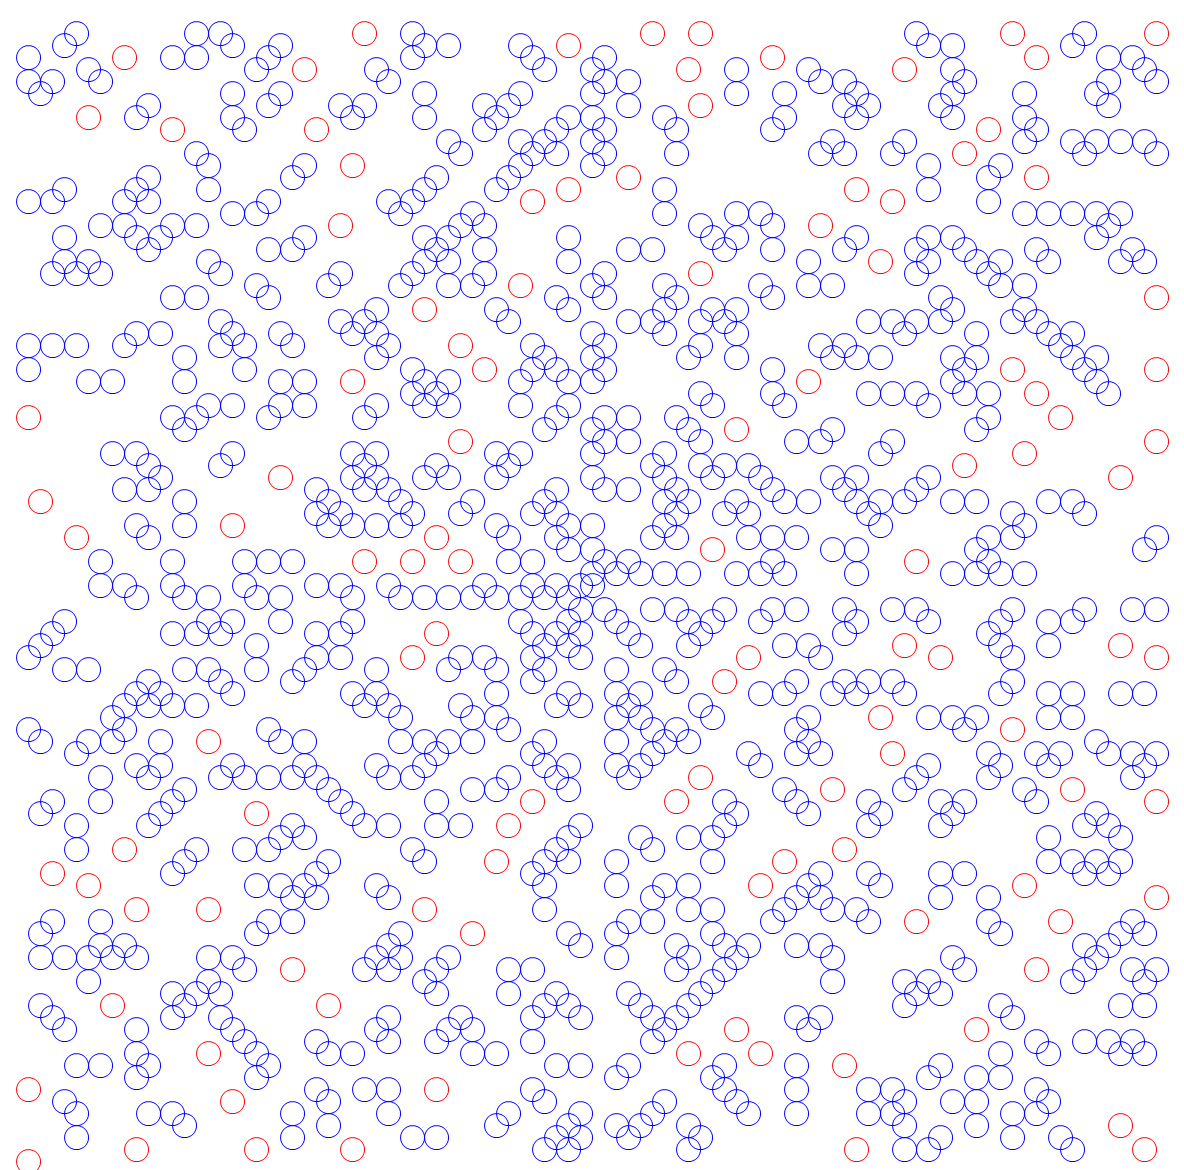 Program output with a circle radius of 12 pixels